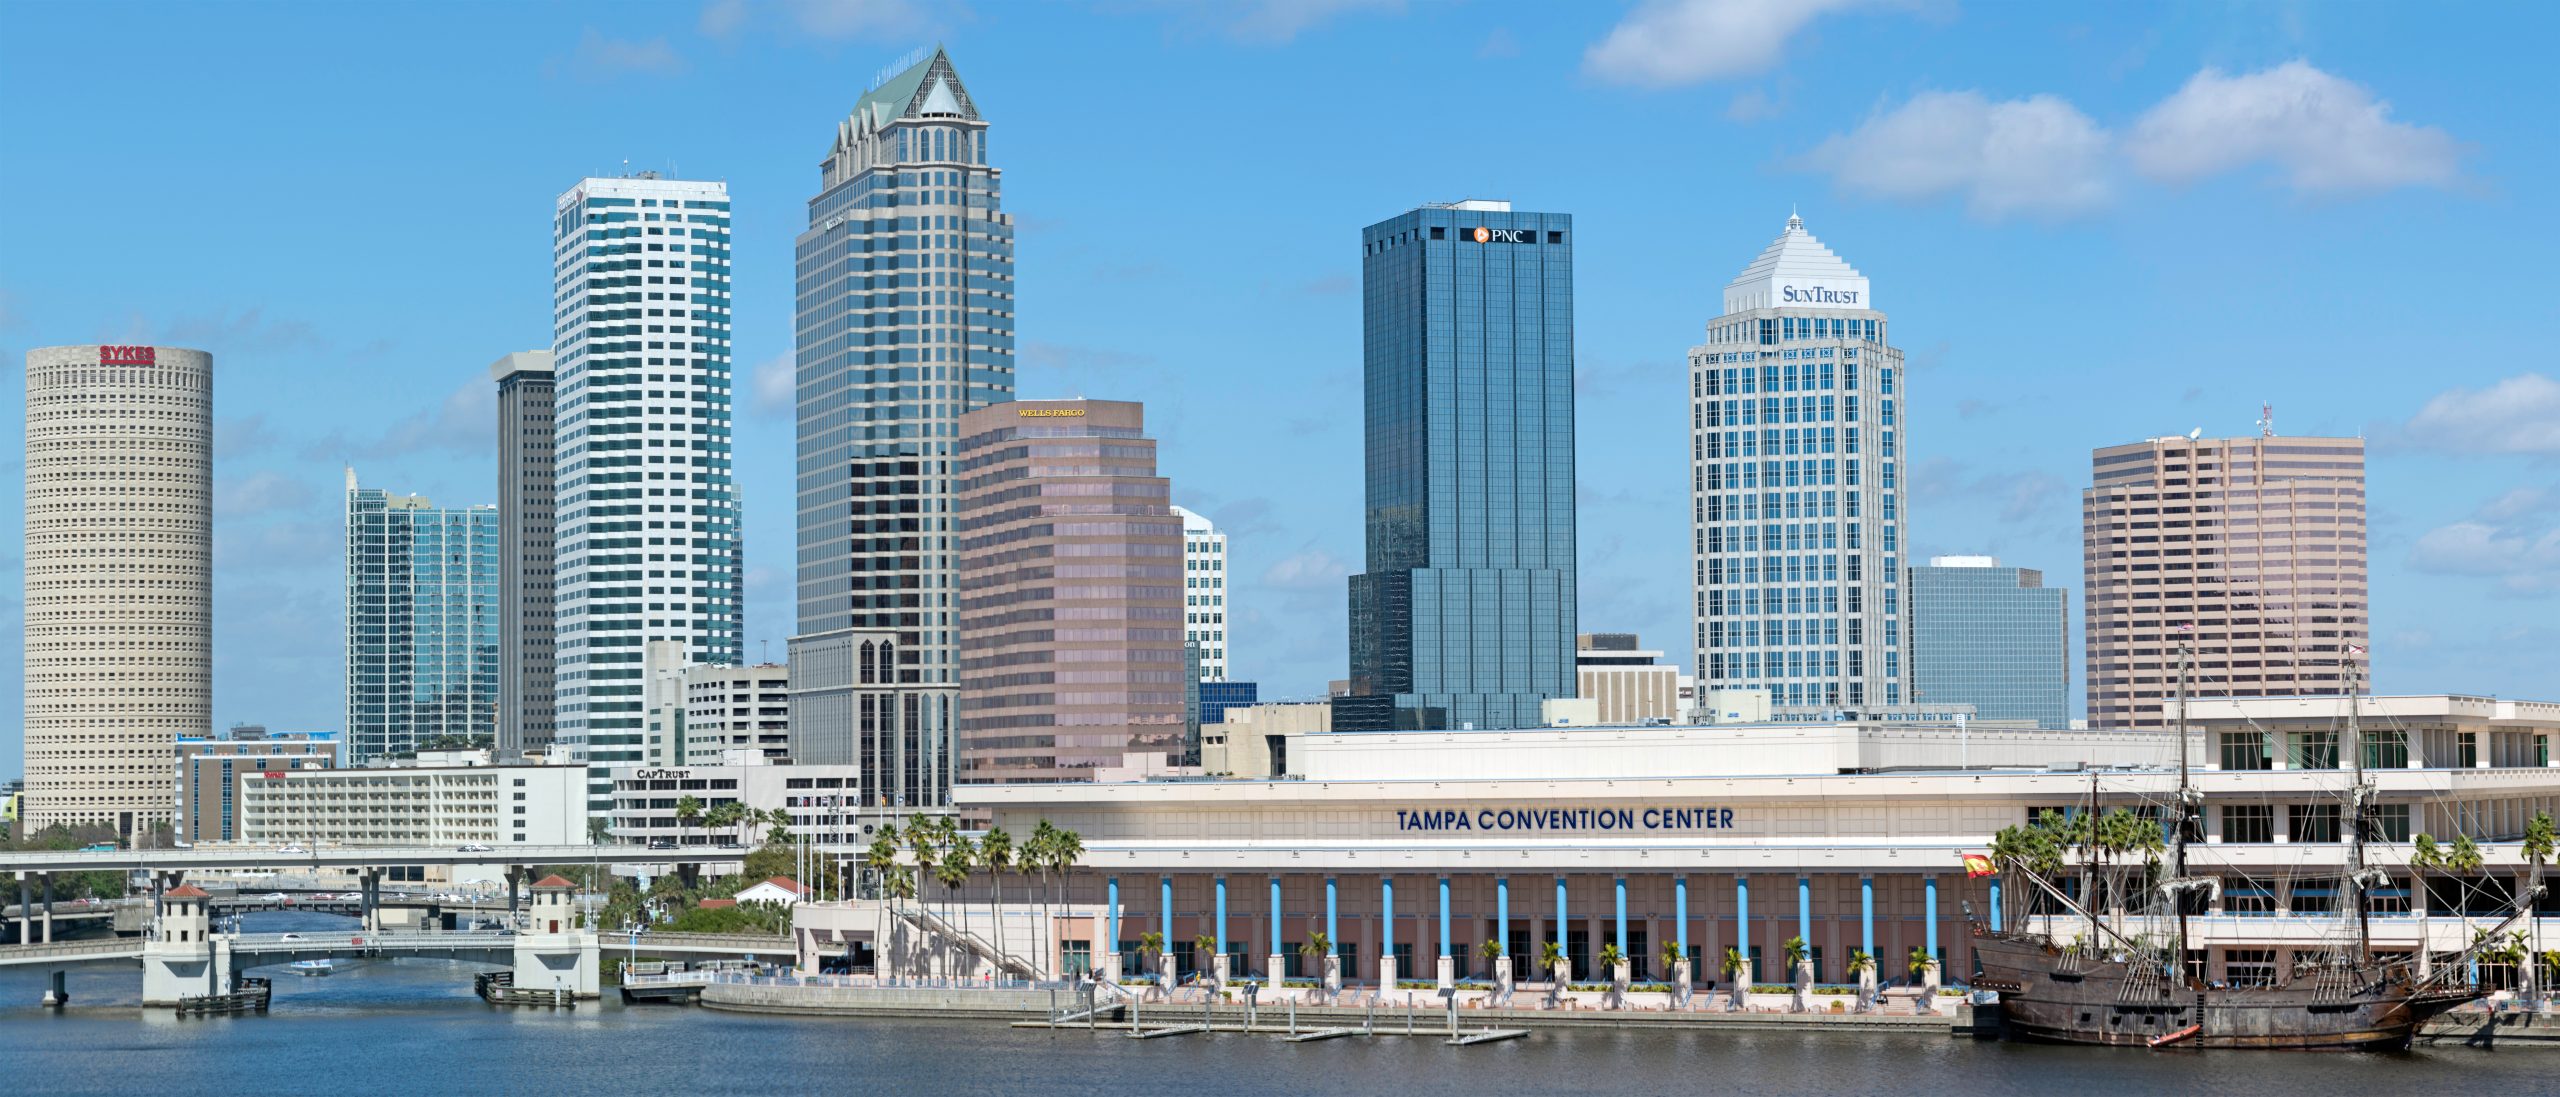 Downtown Tampa Florida skyline